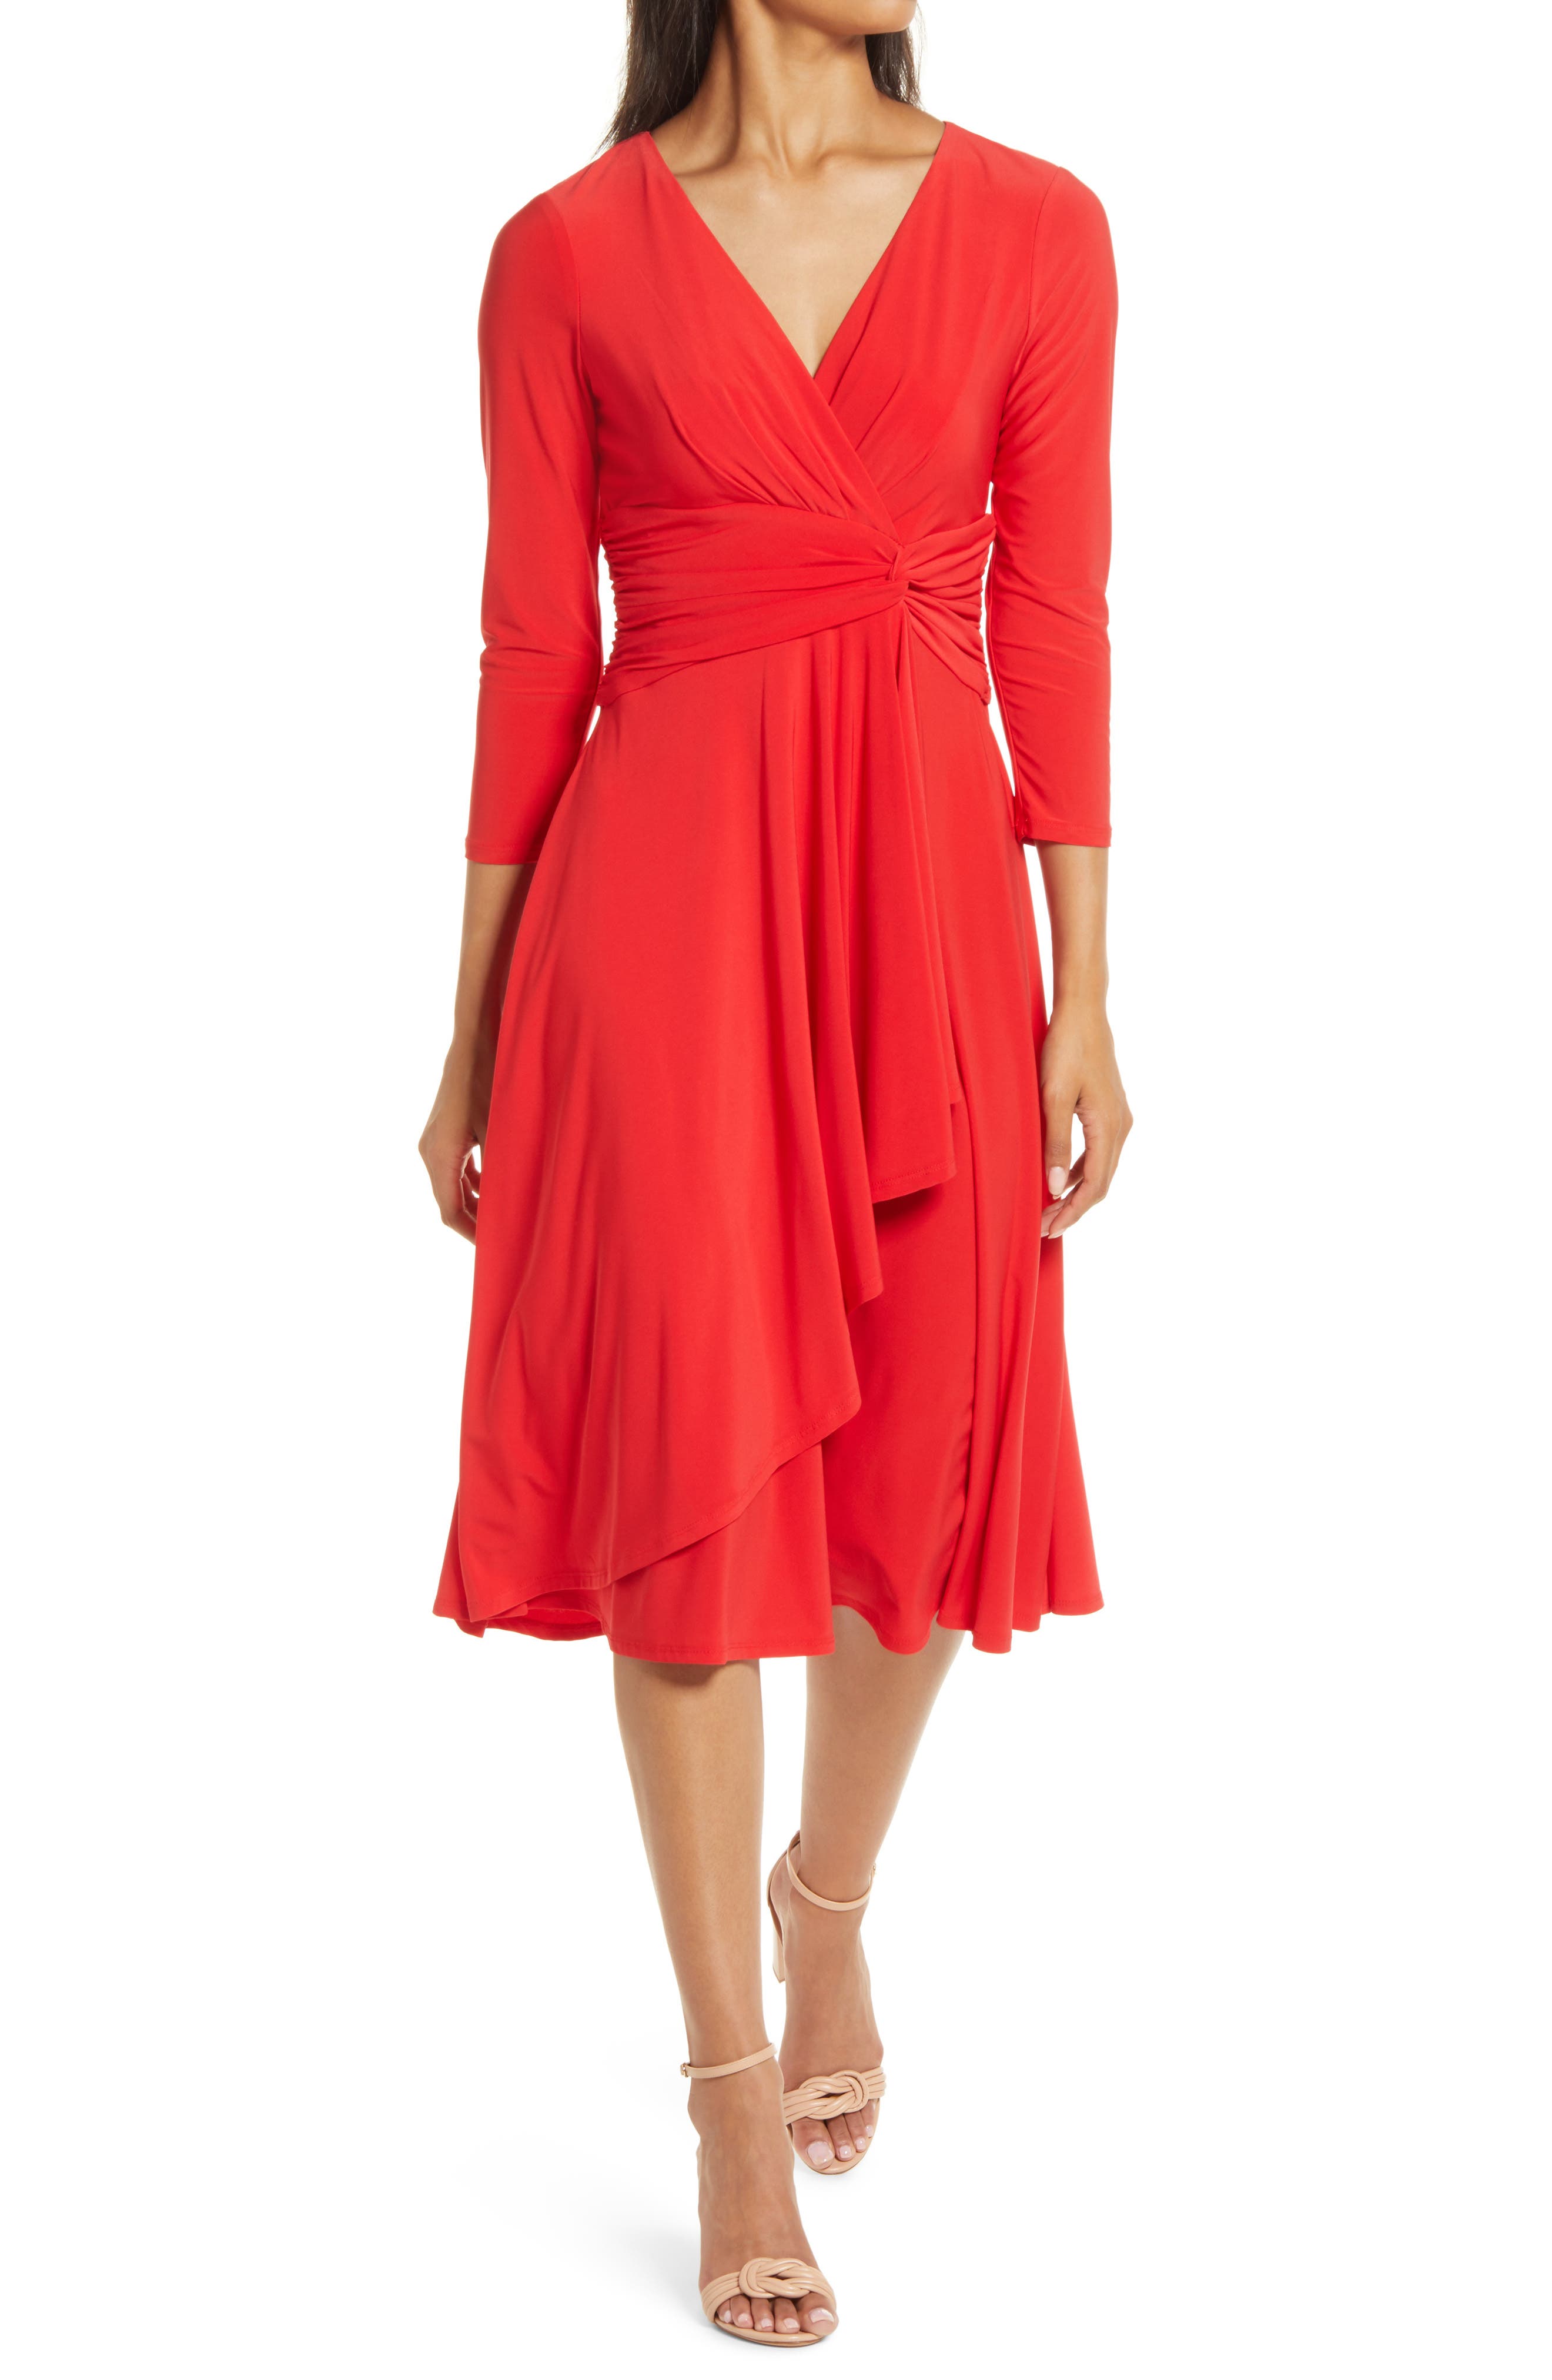 Nordstrom Wrap Dress Hotsell, 52% OFF | espirituviajero.com